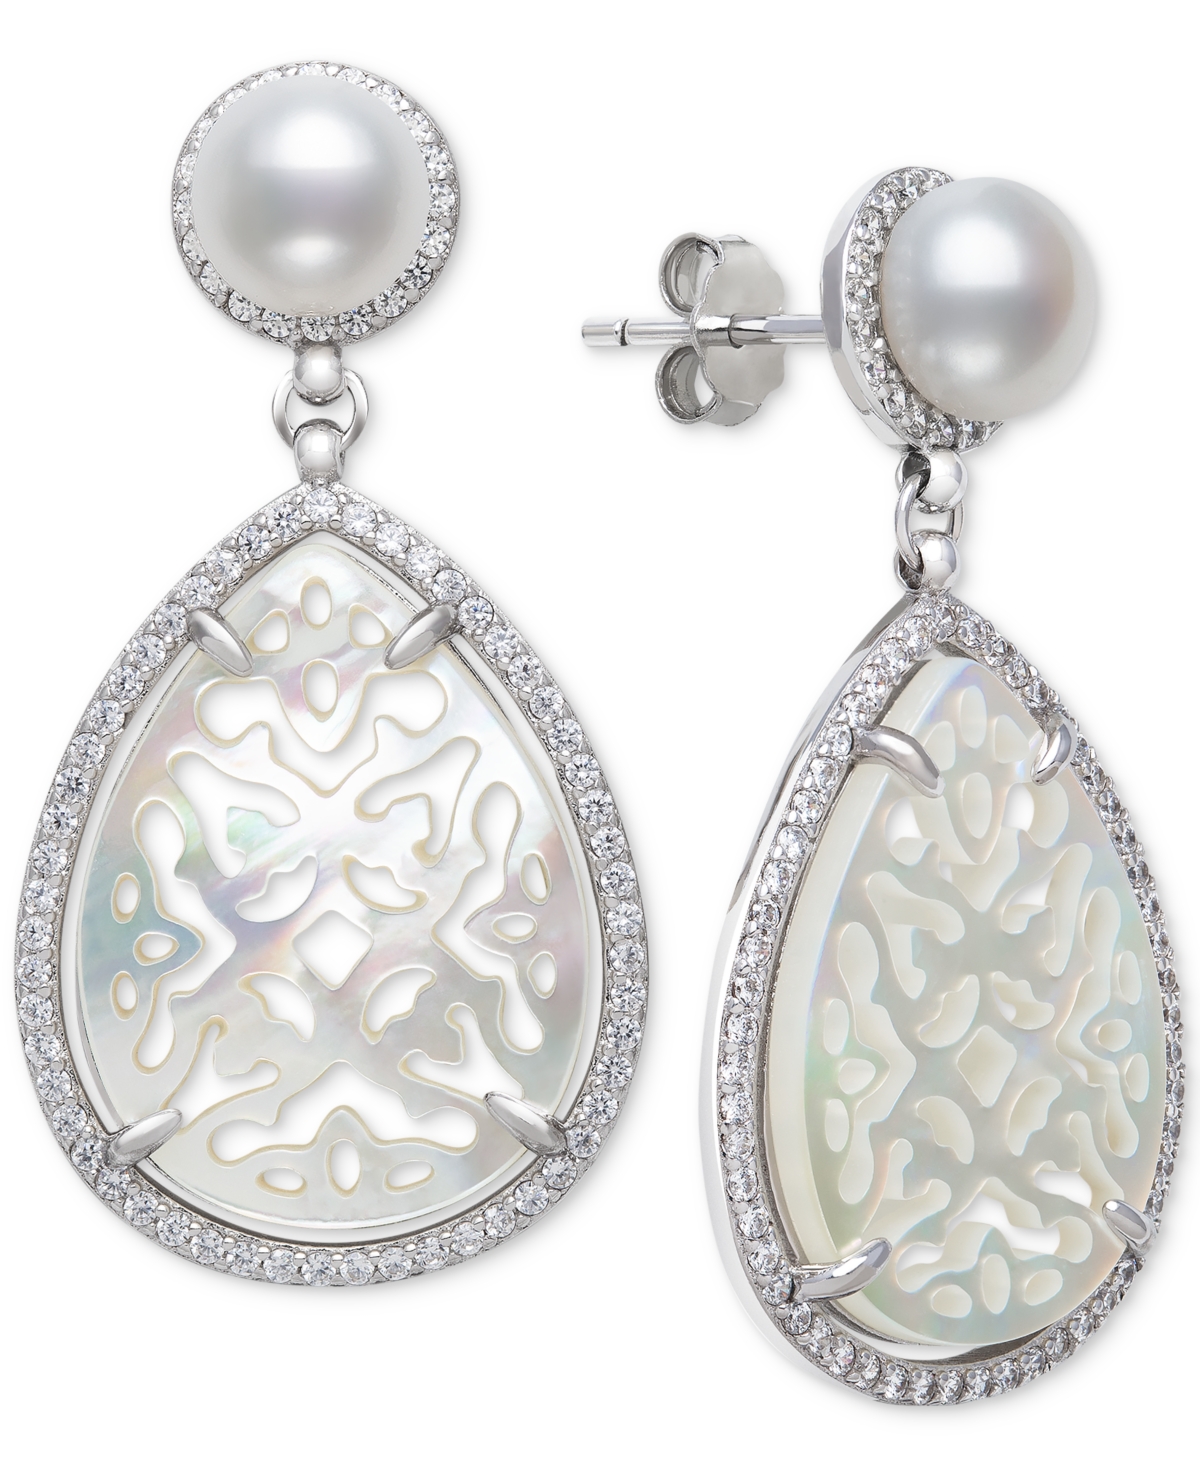 Belle de Mer Cultured Freshwater Pearl (6mm) & Mother-of-Pearl Drop Earrings in Sterling Silver